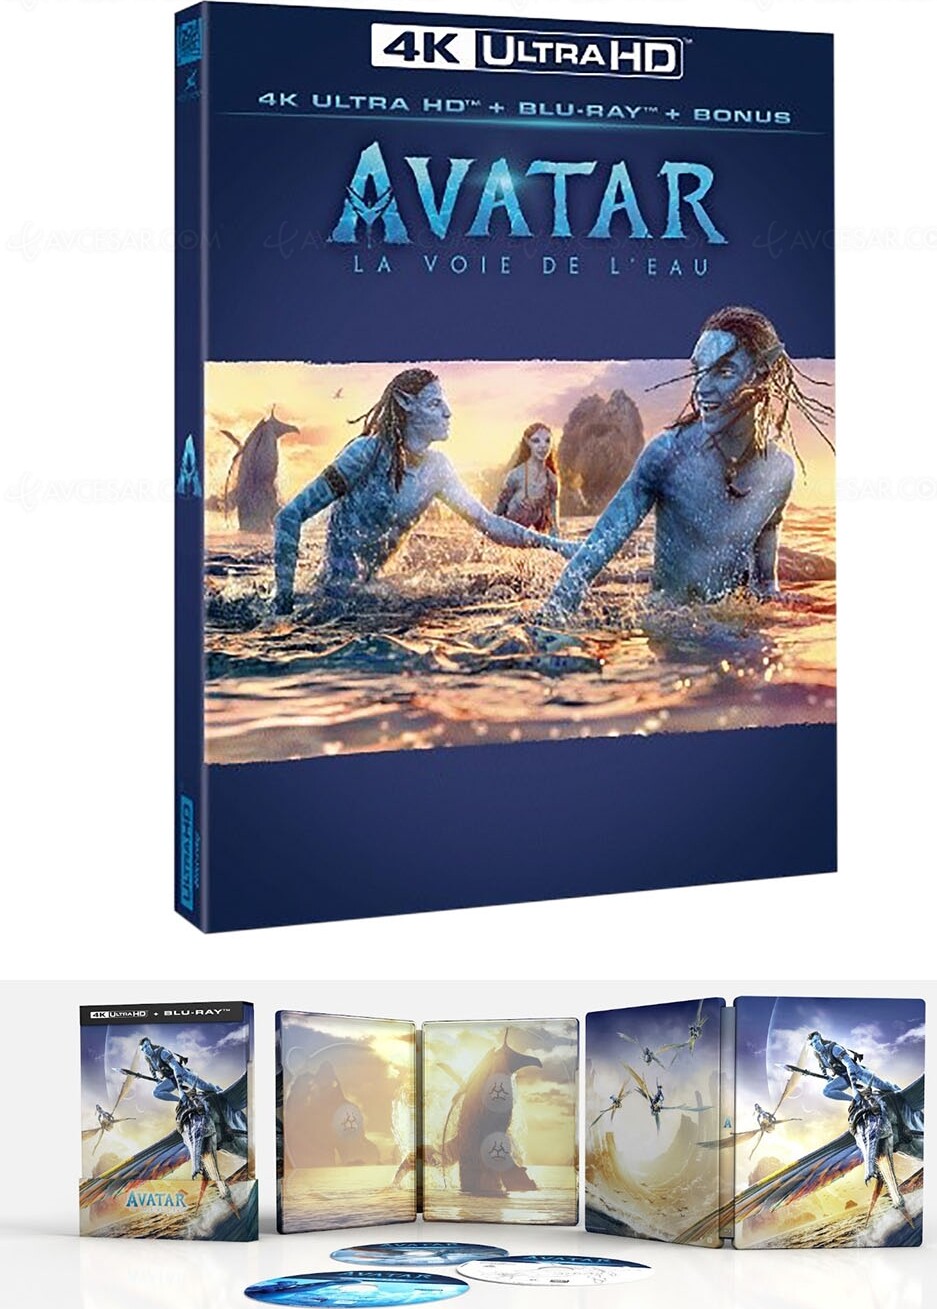 Avatar 2 The Way Of Water Steelbook 4k Ultra Hd Blu Ray Film → Køb Billigt Her Guccadk 4379